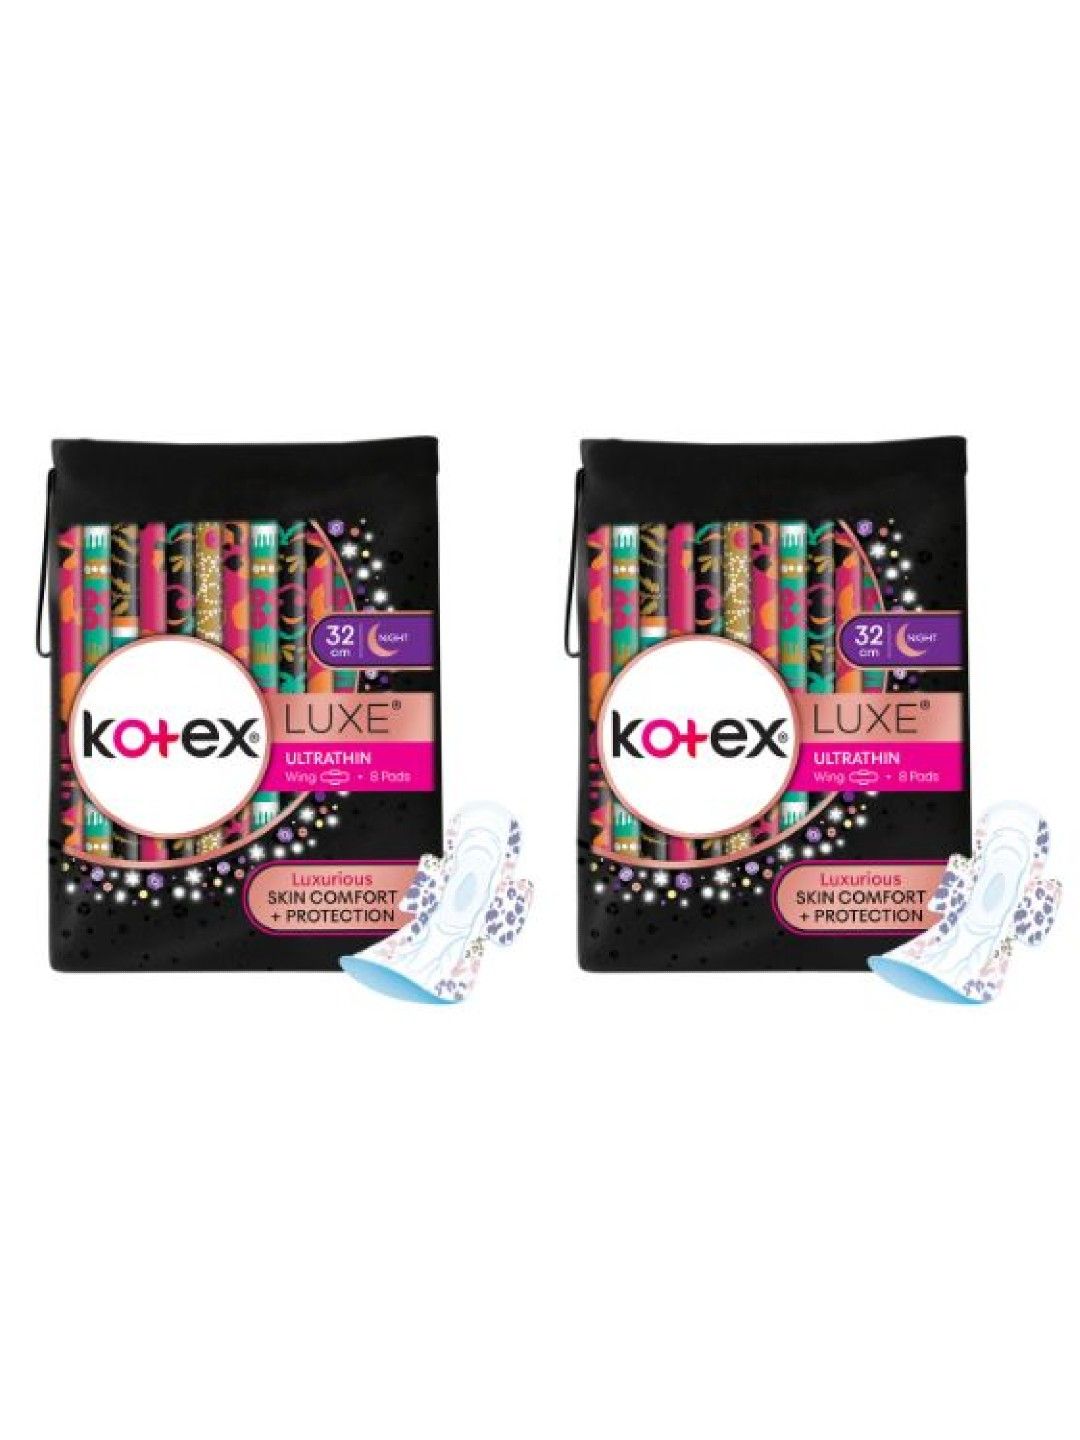 Kotex Luxe Ultrathin Feminine Pads 32cm - 16 pads (8 Pads x 2  Packs)